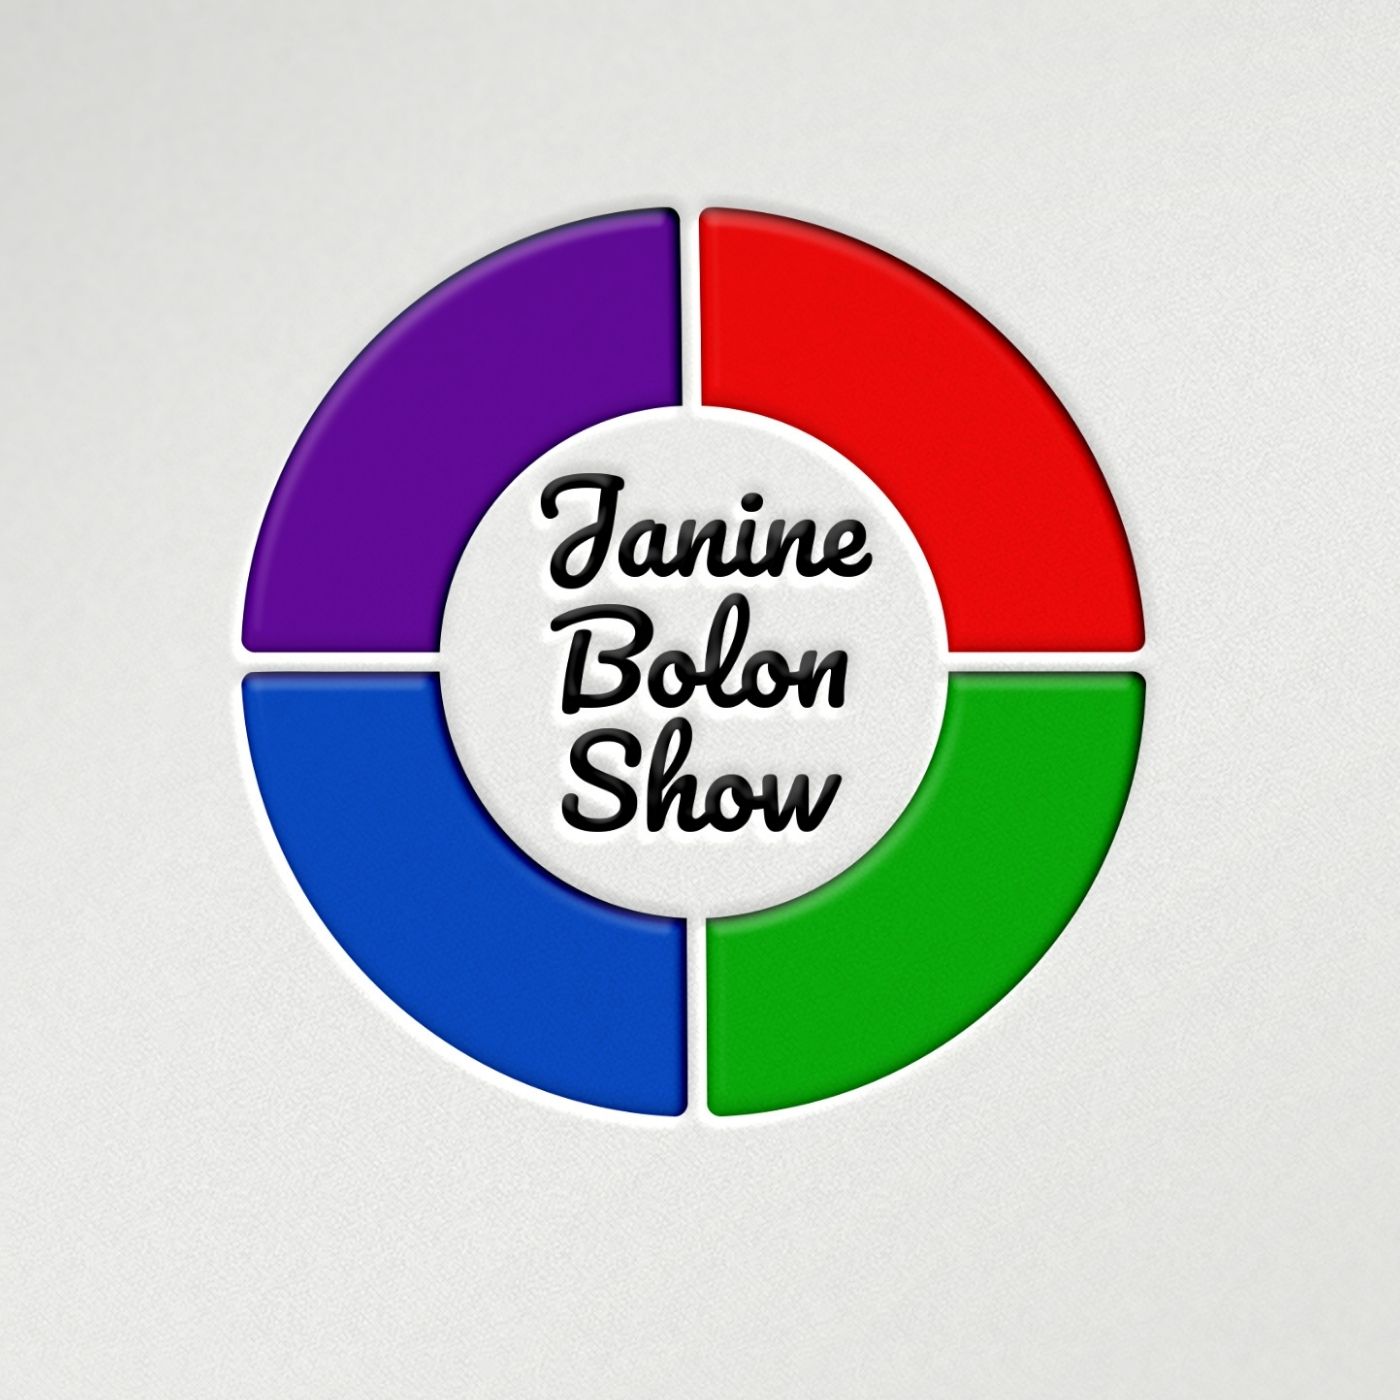 The Janine Bolon Radio Show